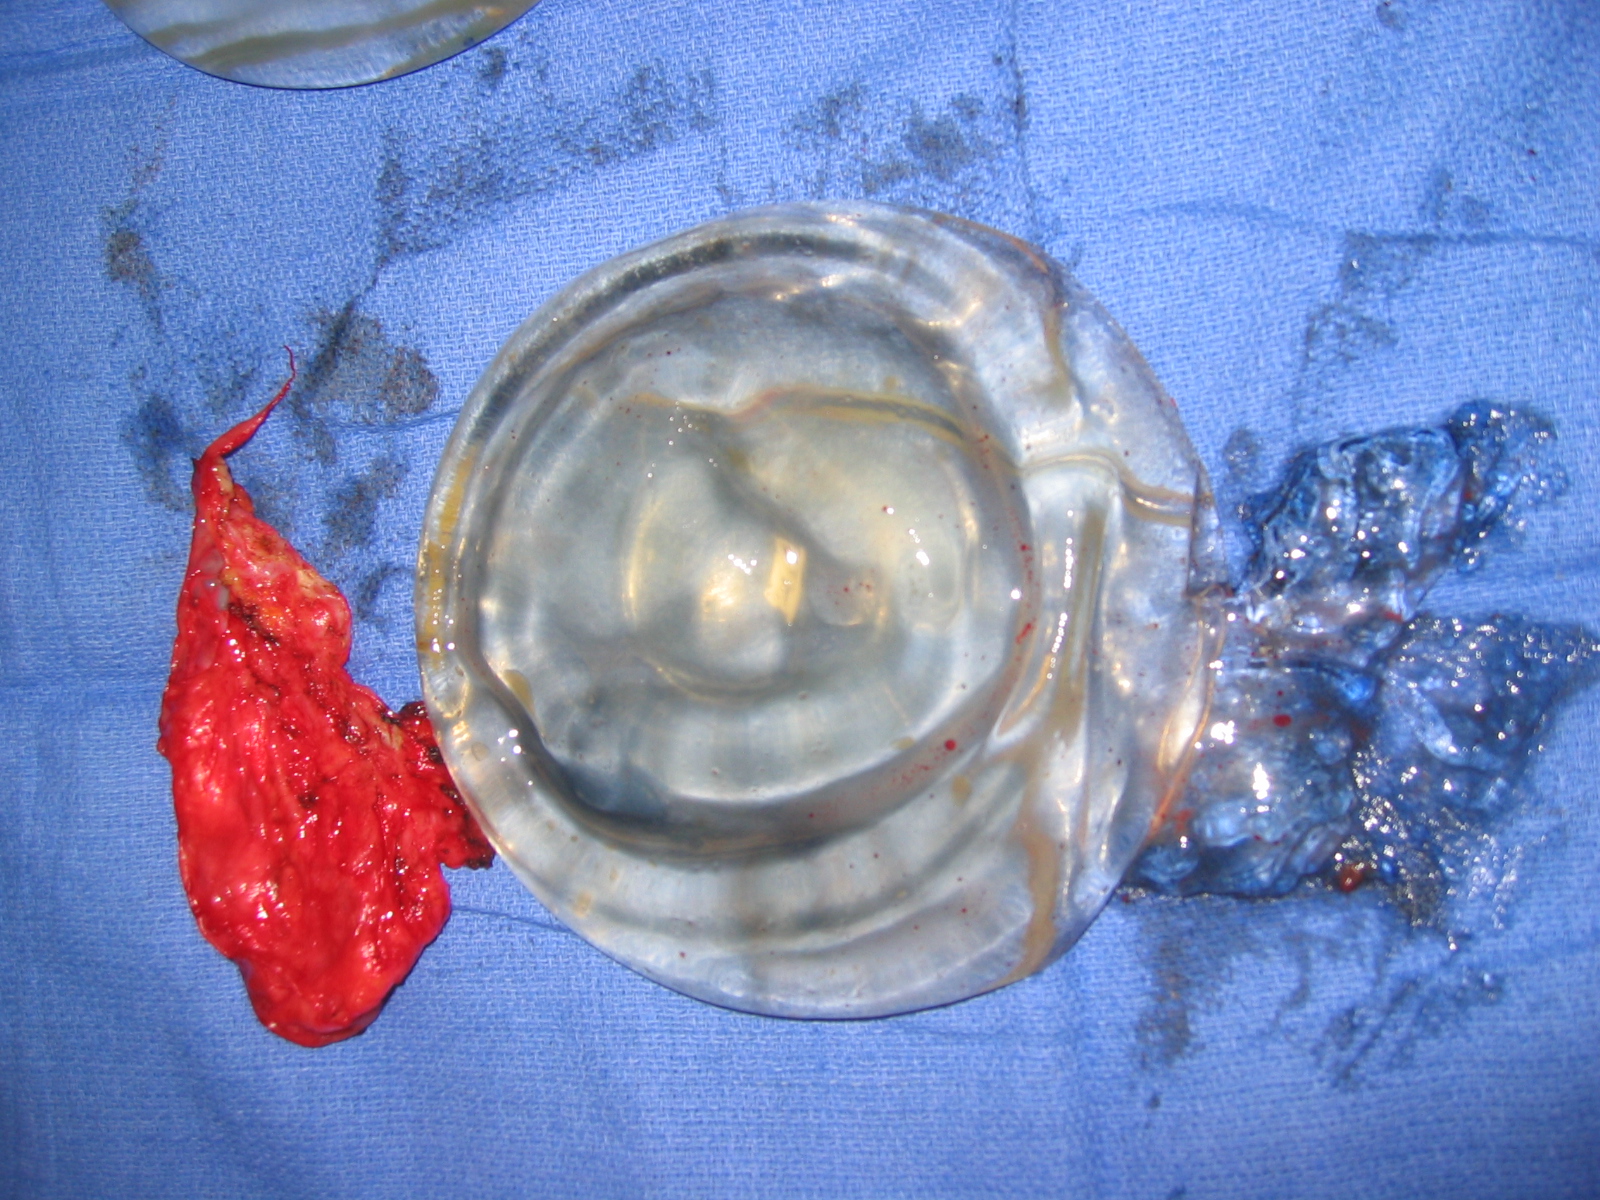 File:Ruptured implant.JPG